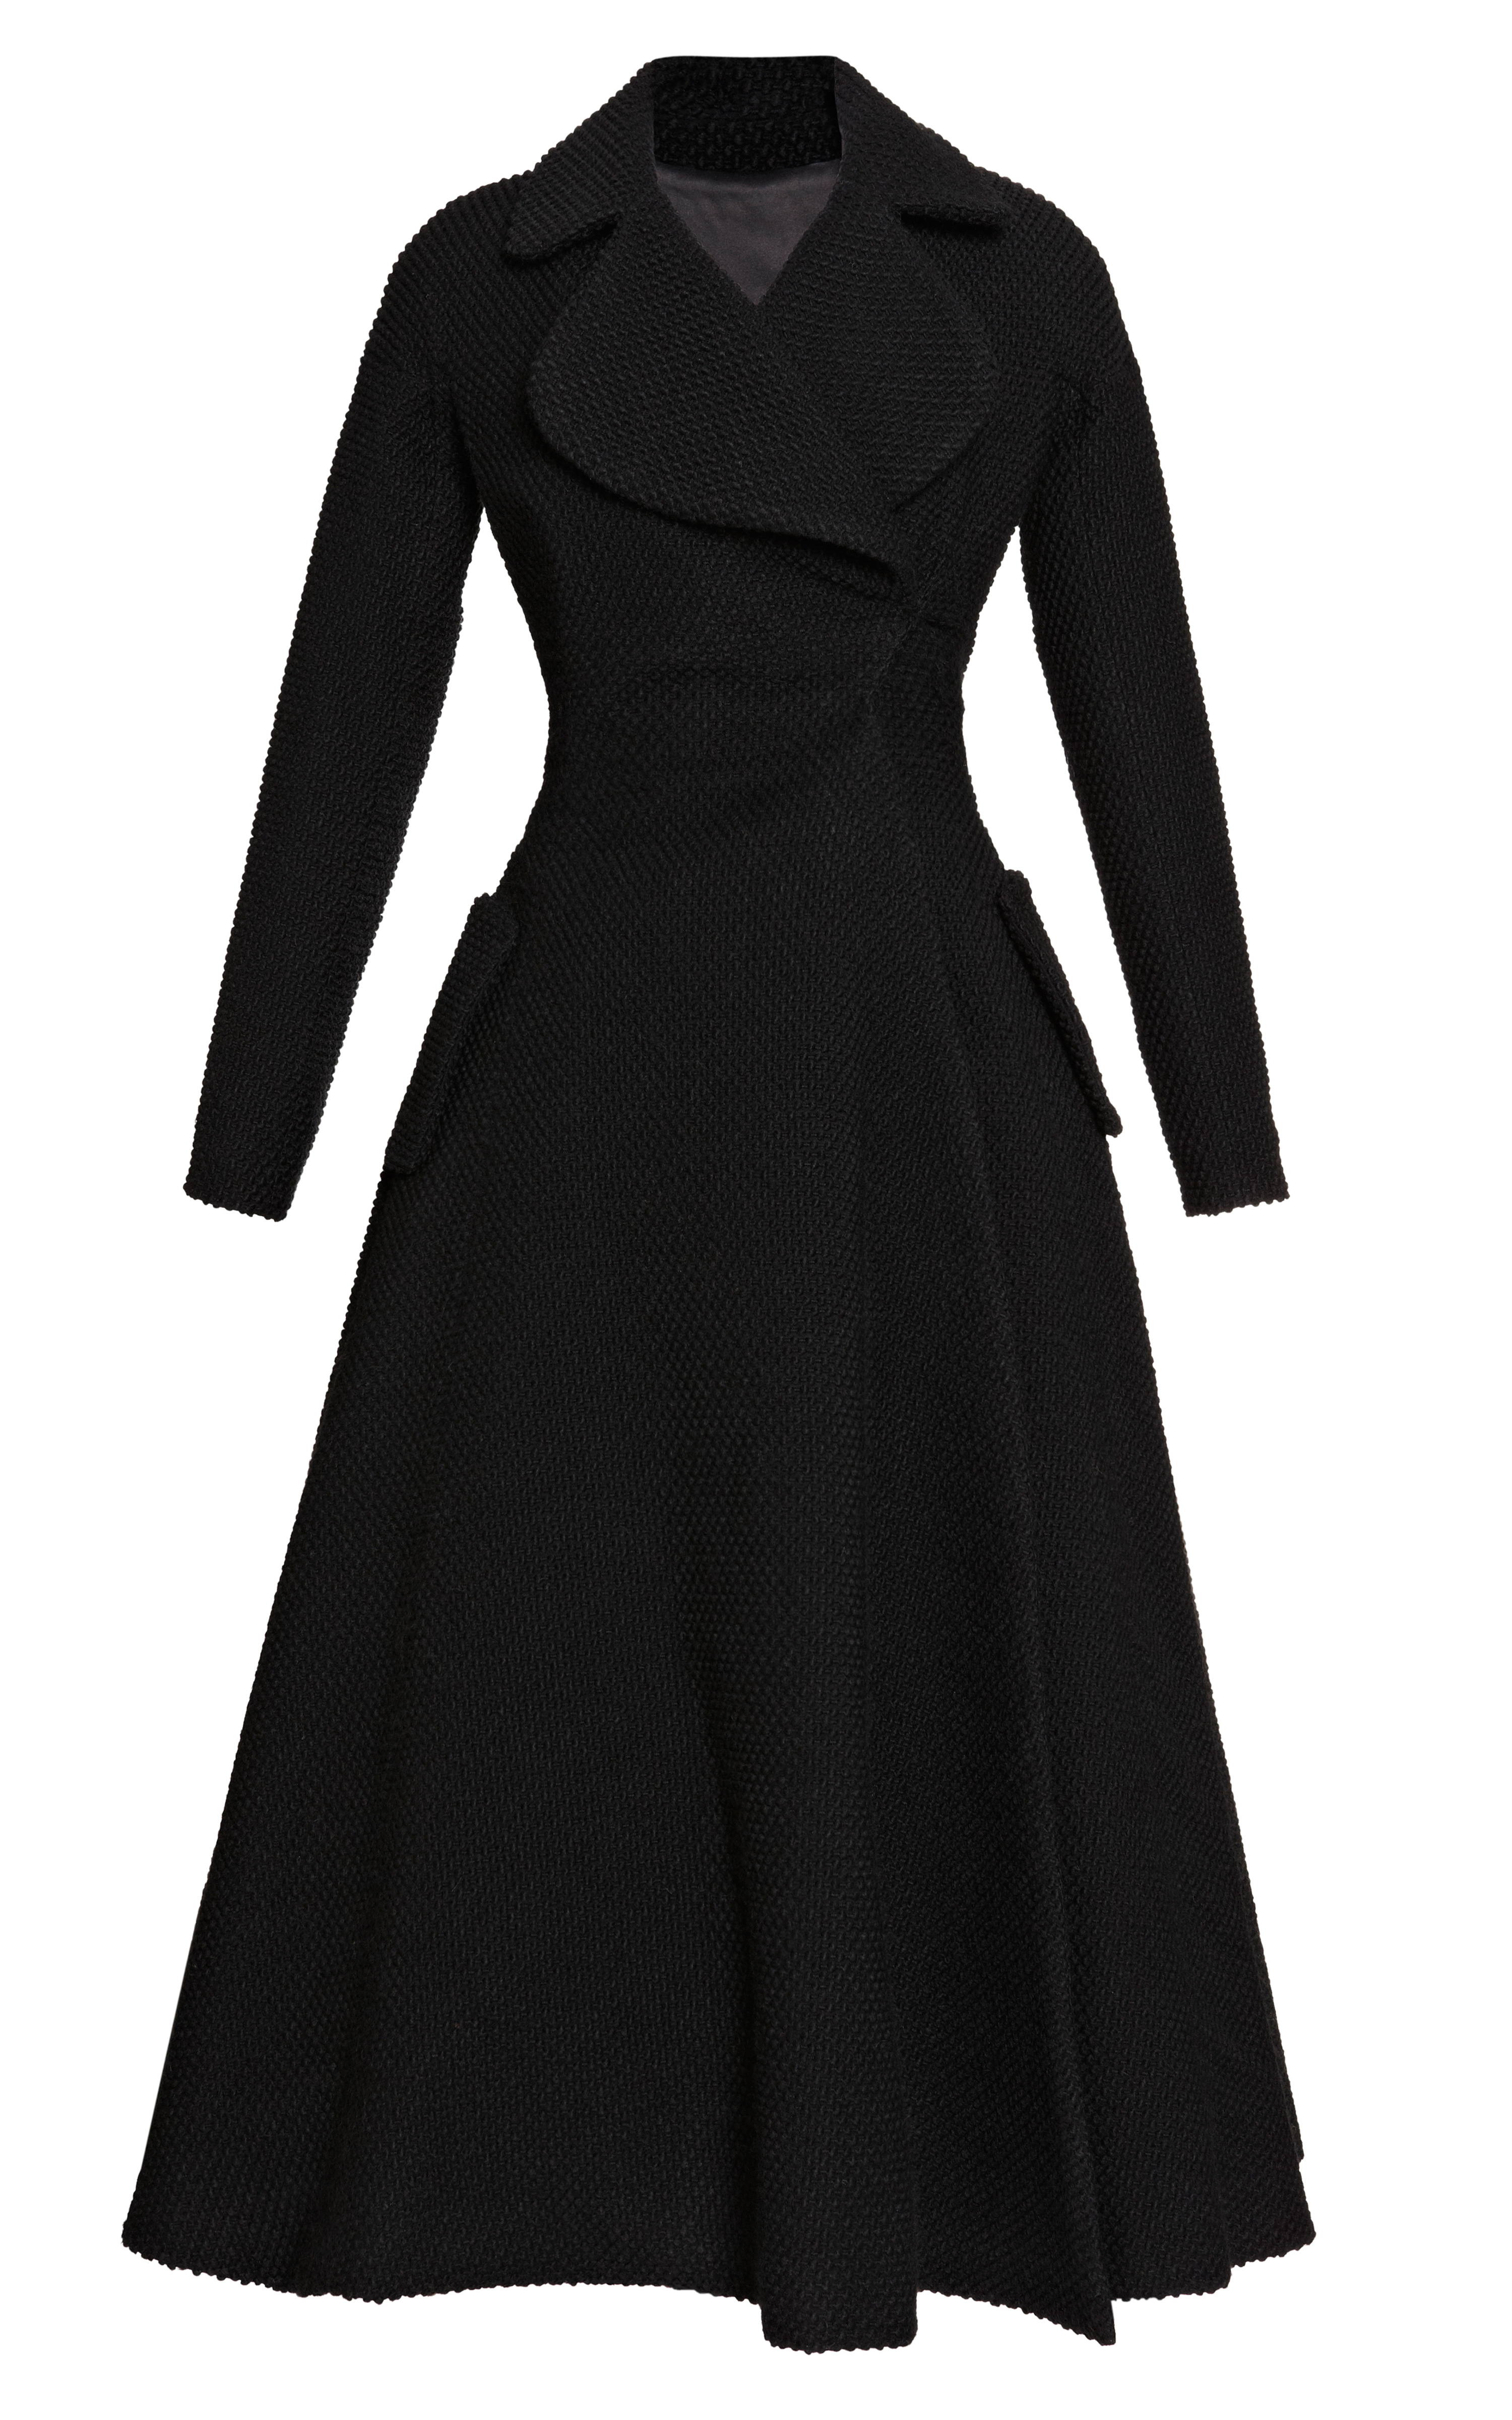 Emilia Wickstead C Coat Dress with Tuille Fusing in Black - Lyst